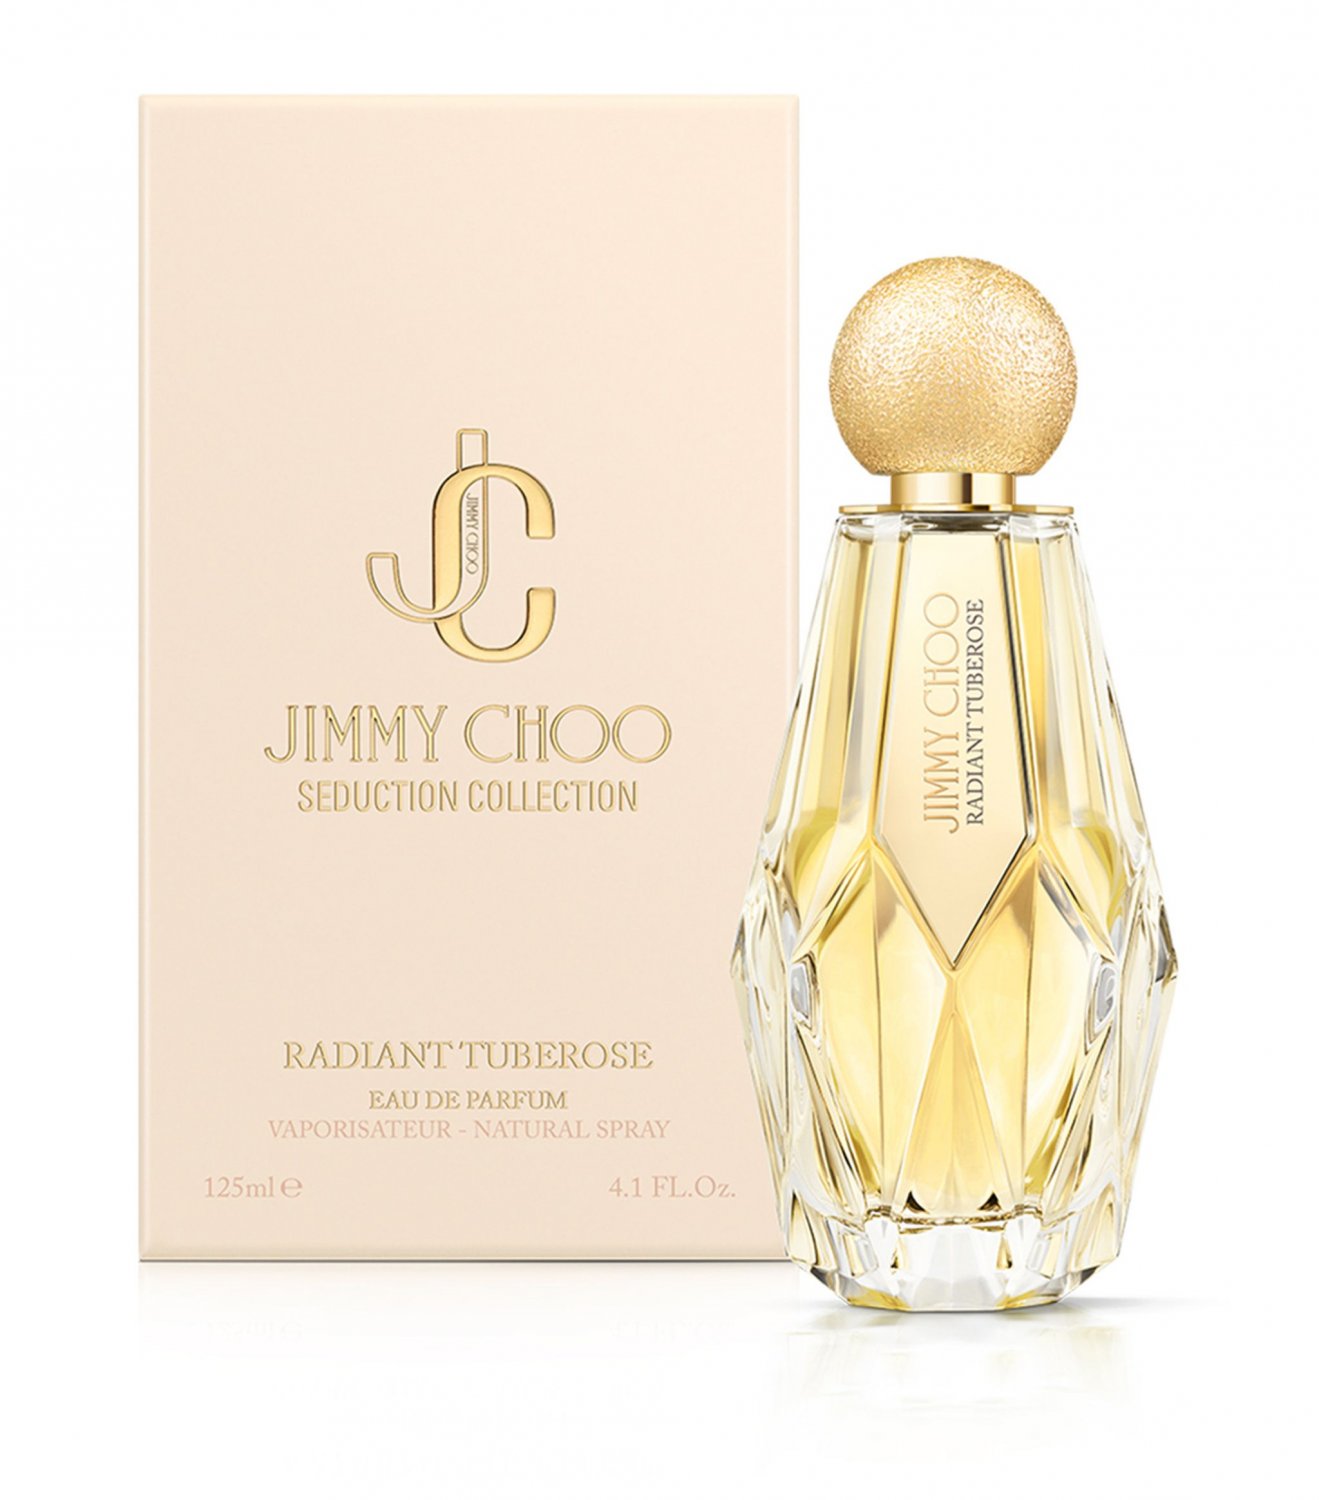 Jimmy Choo Seduction Collection Radiant Tuberose Eau de Parfum 4.1 oz/125 ml Spray.